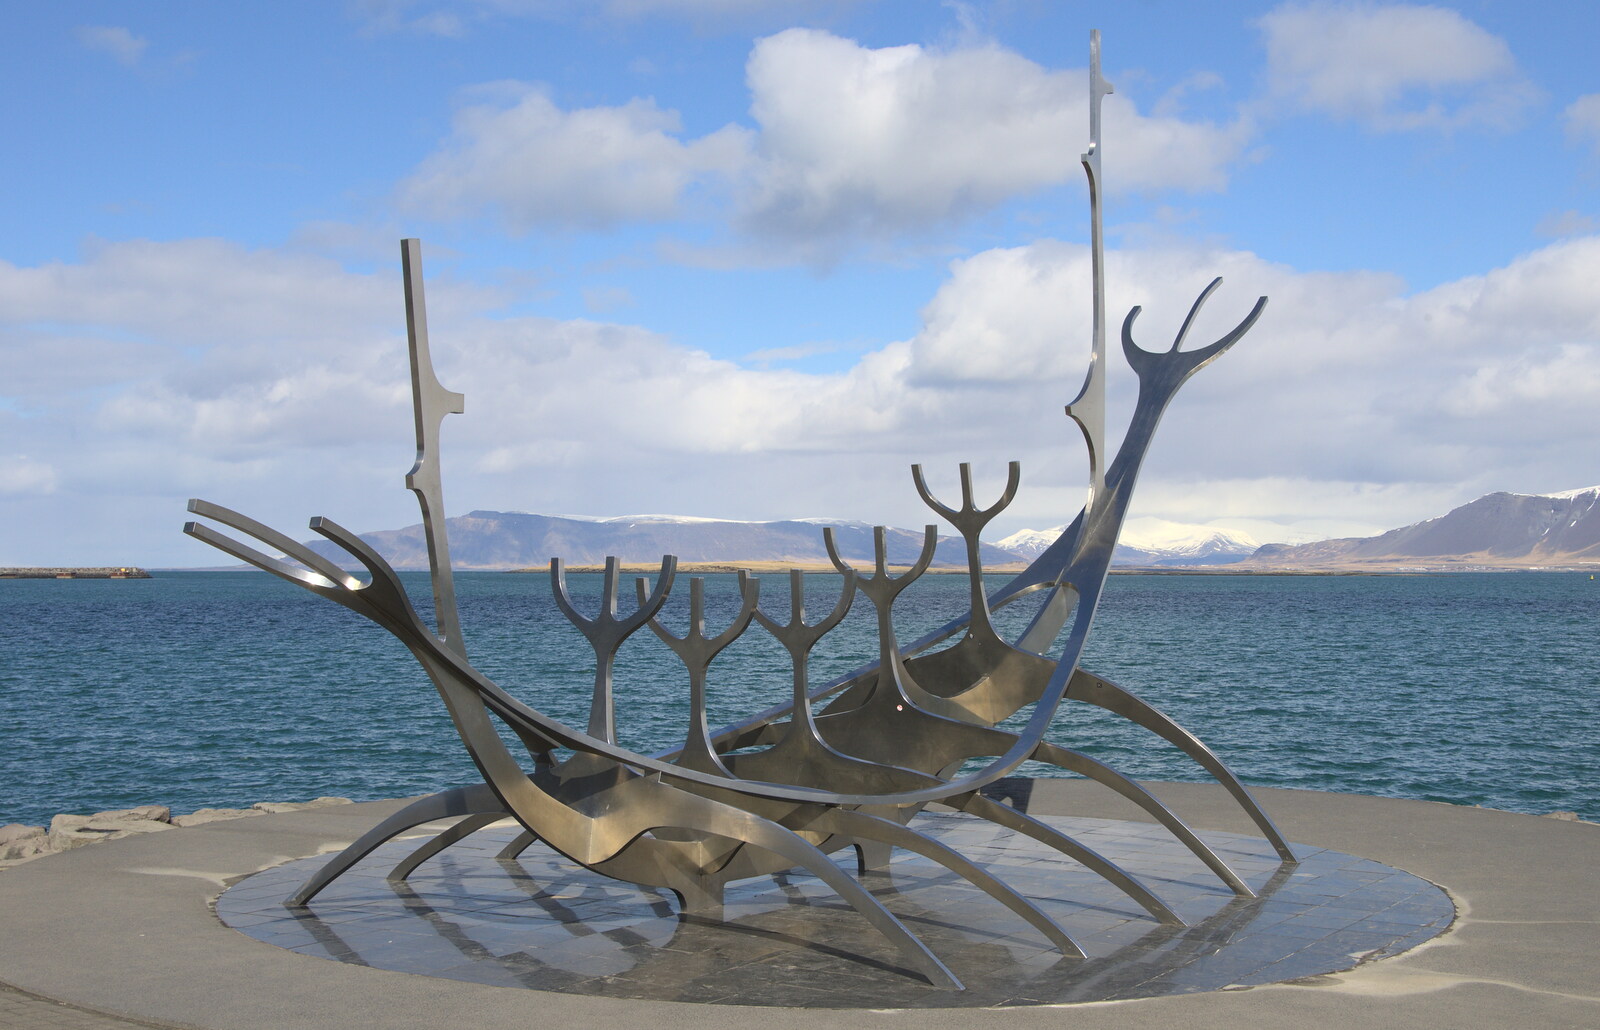 The Solfar 'Sun Voyager' sculpture from Stríðsminjar War Relics, Perlan and Street Art, Reykjavik, Iceland - 23rd April 2017